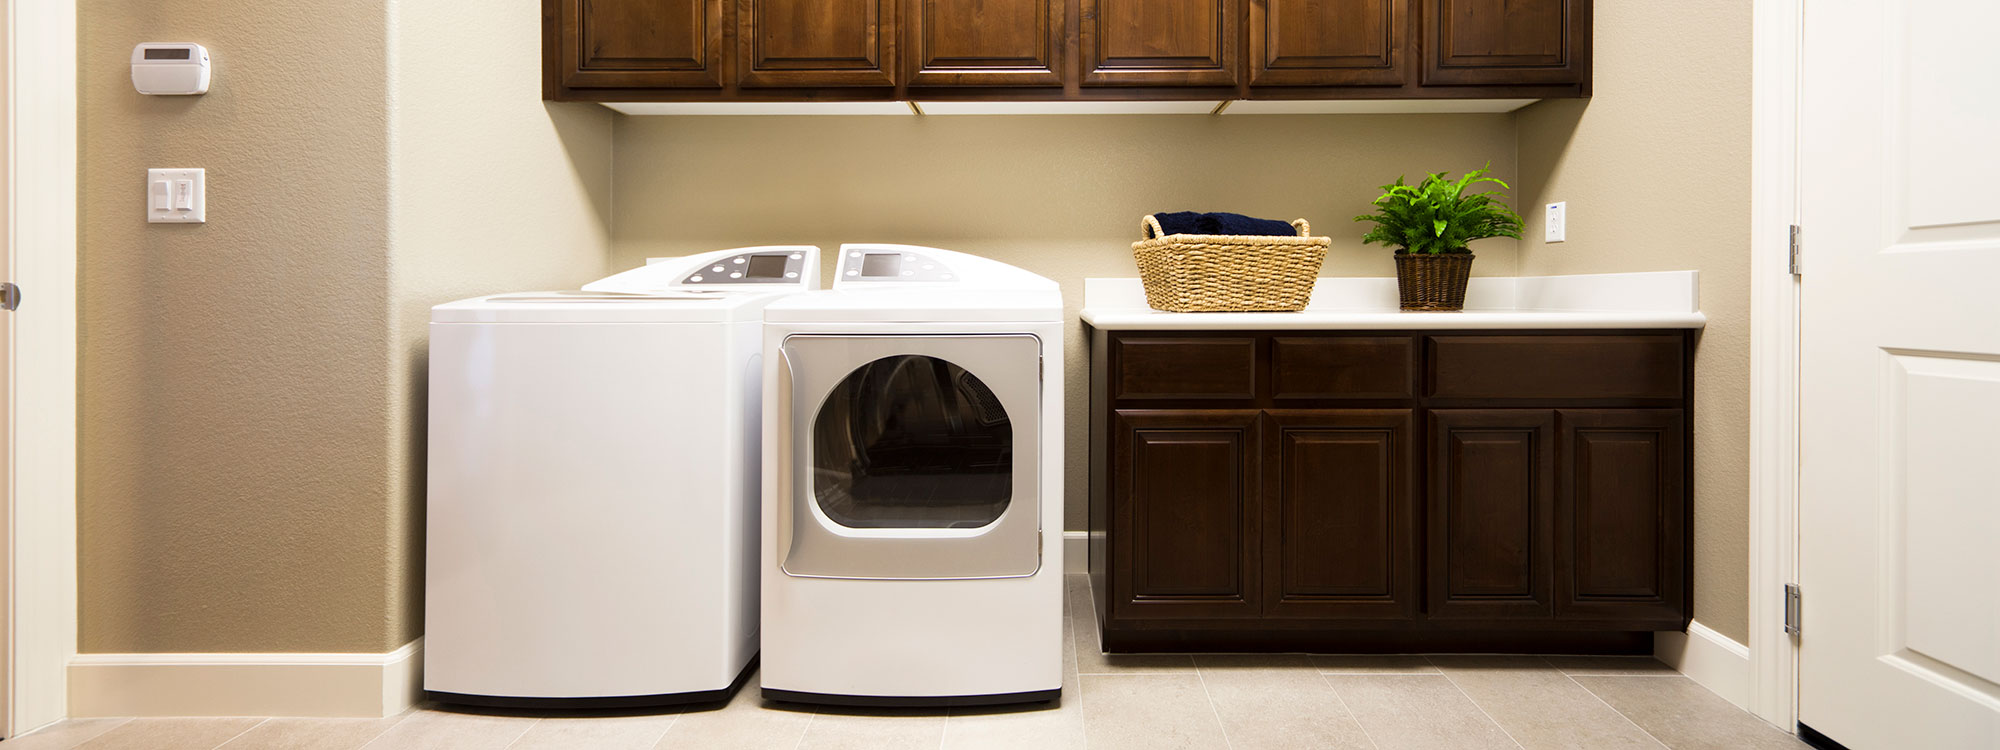 Sarasota-Glass-laundry-organization-featured-image